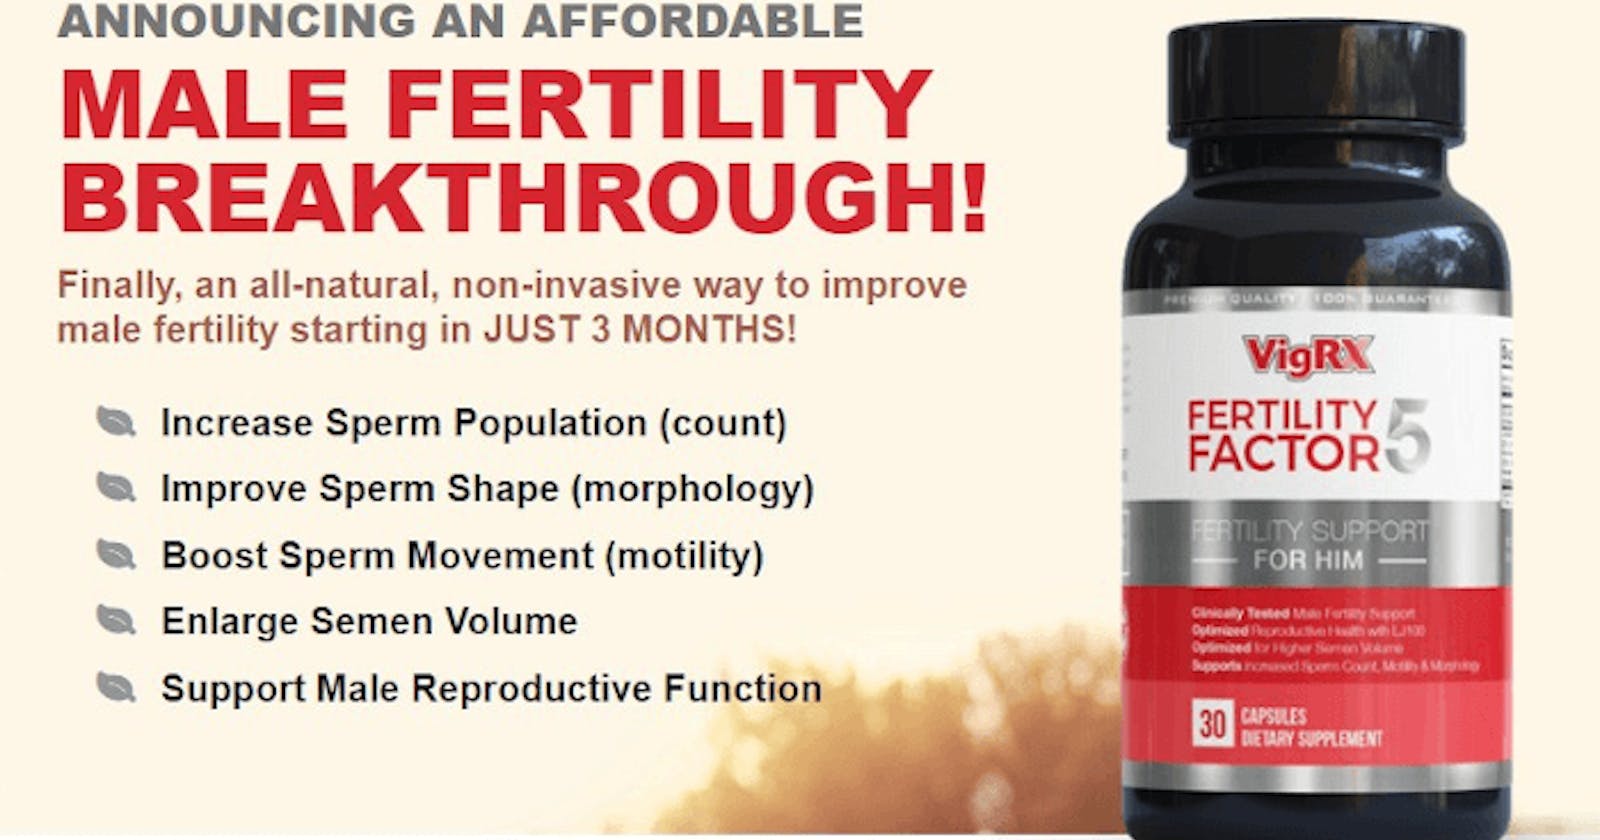 VigRX Fertility Factor 5 Australia Trustpilot Boost Sperm